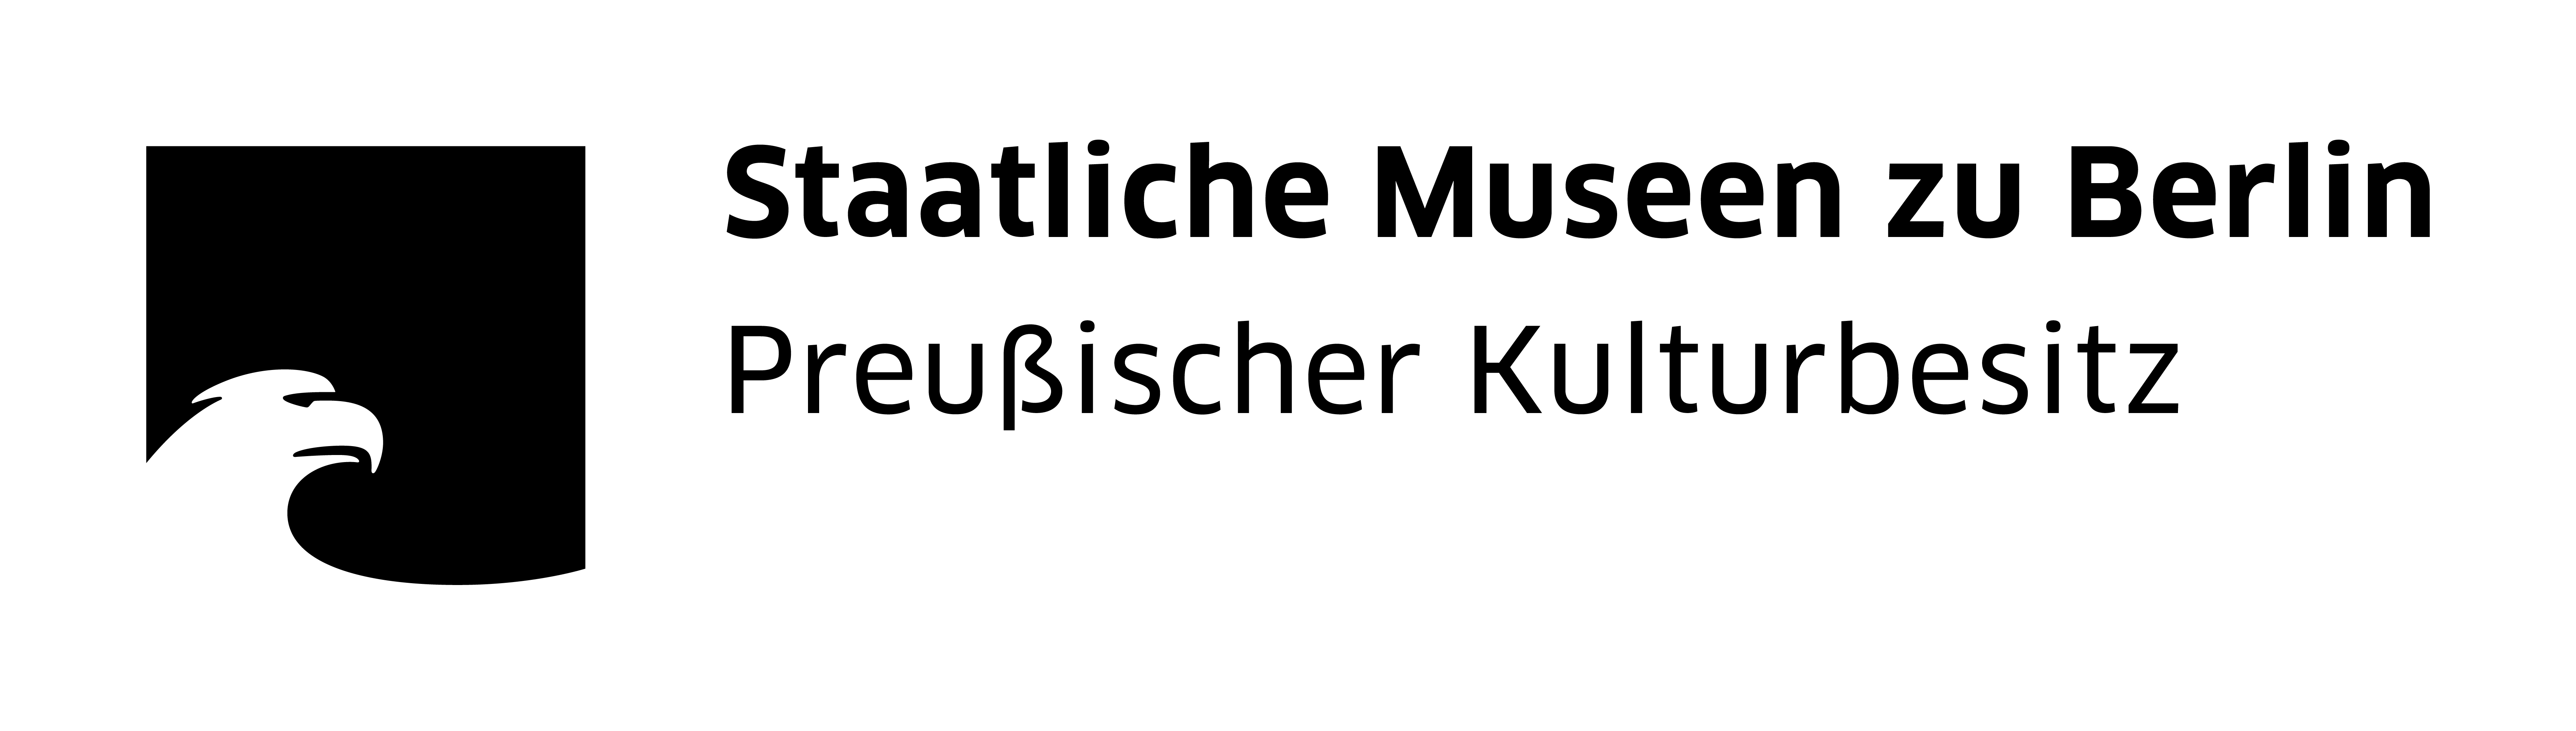 Staatliche Museen zu Berlin - Preußischer Kulturbesitz